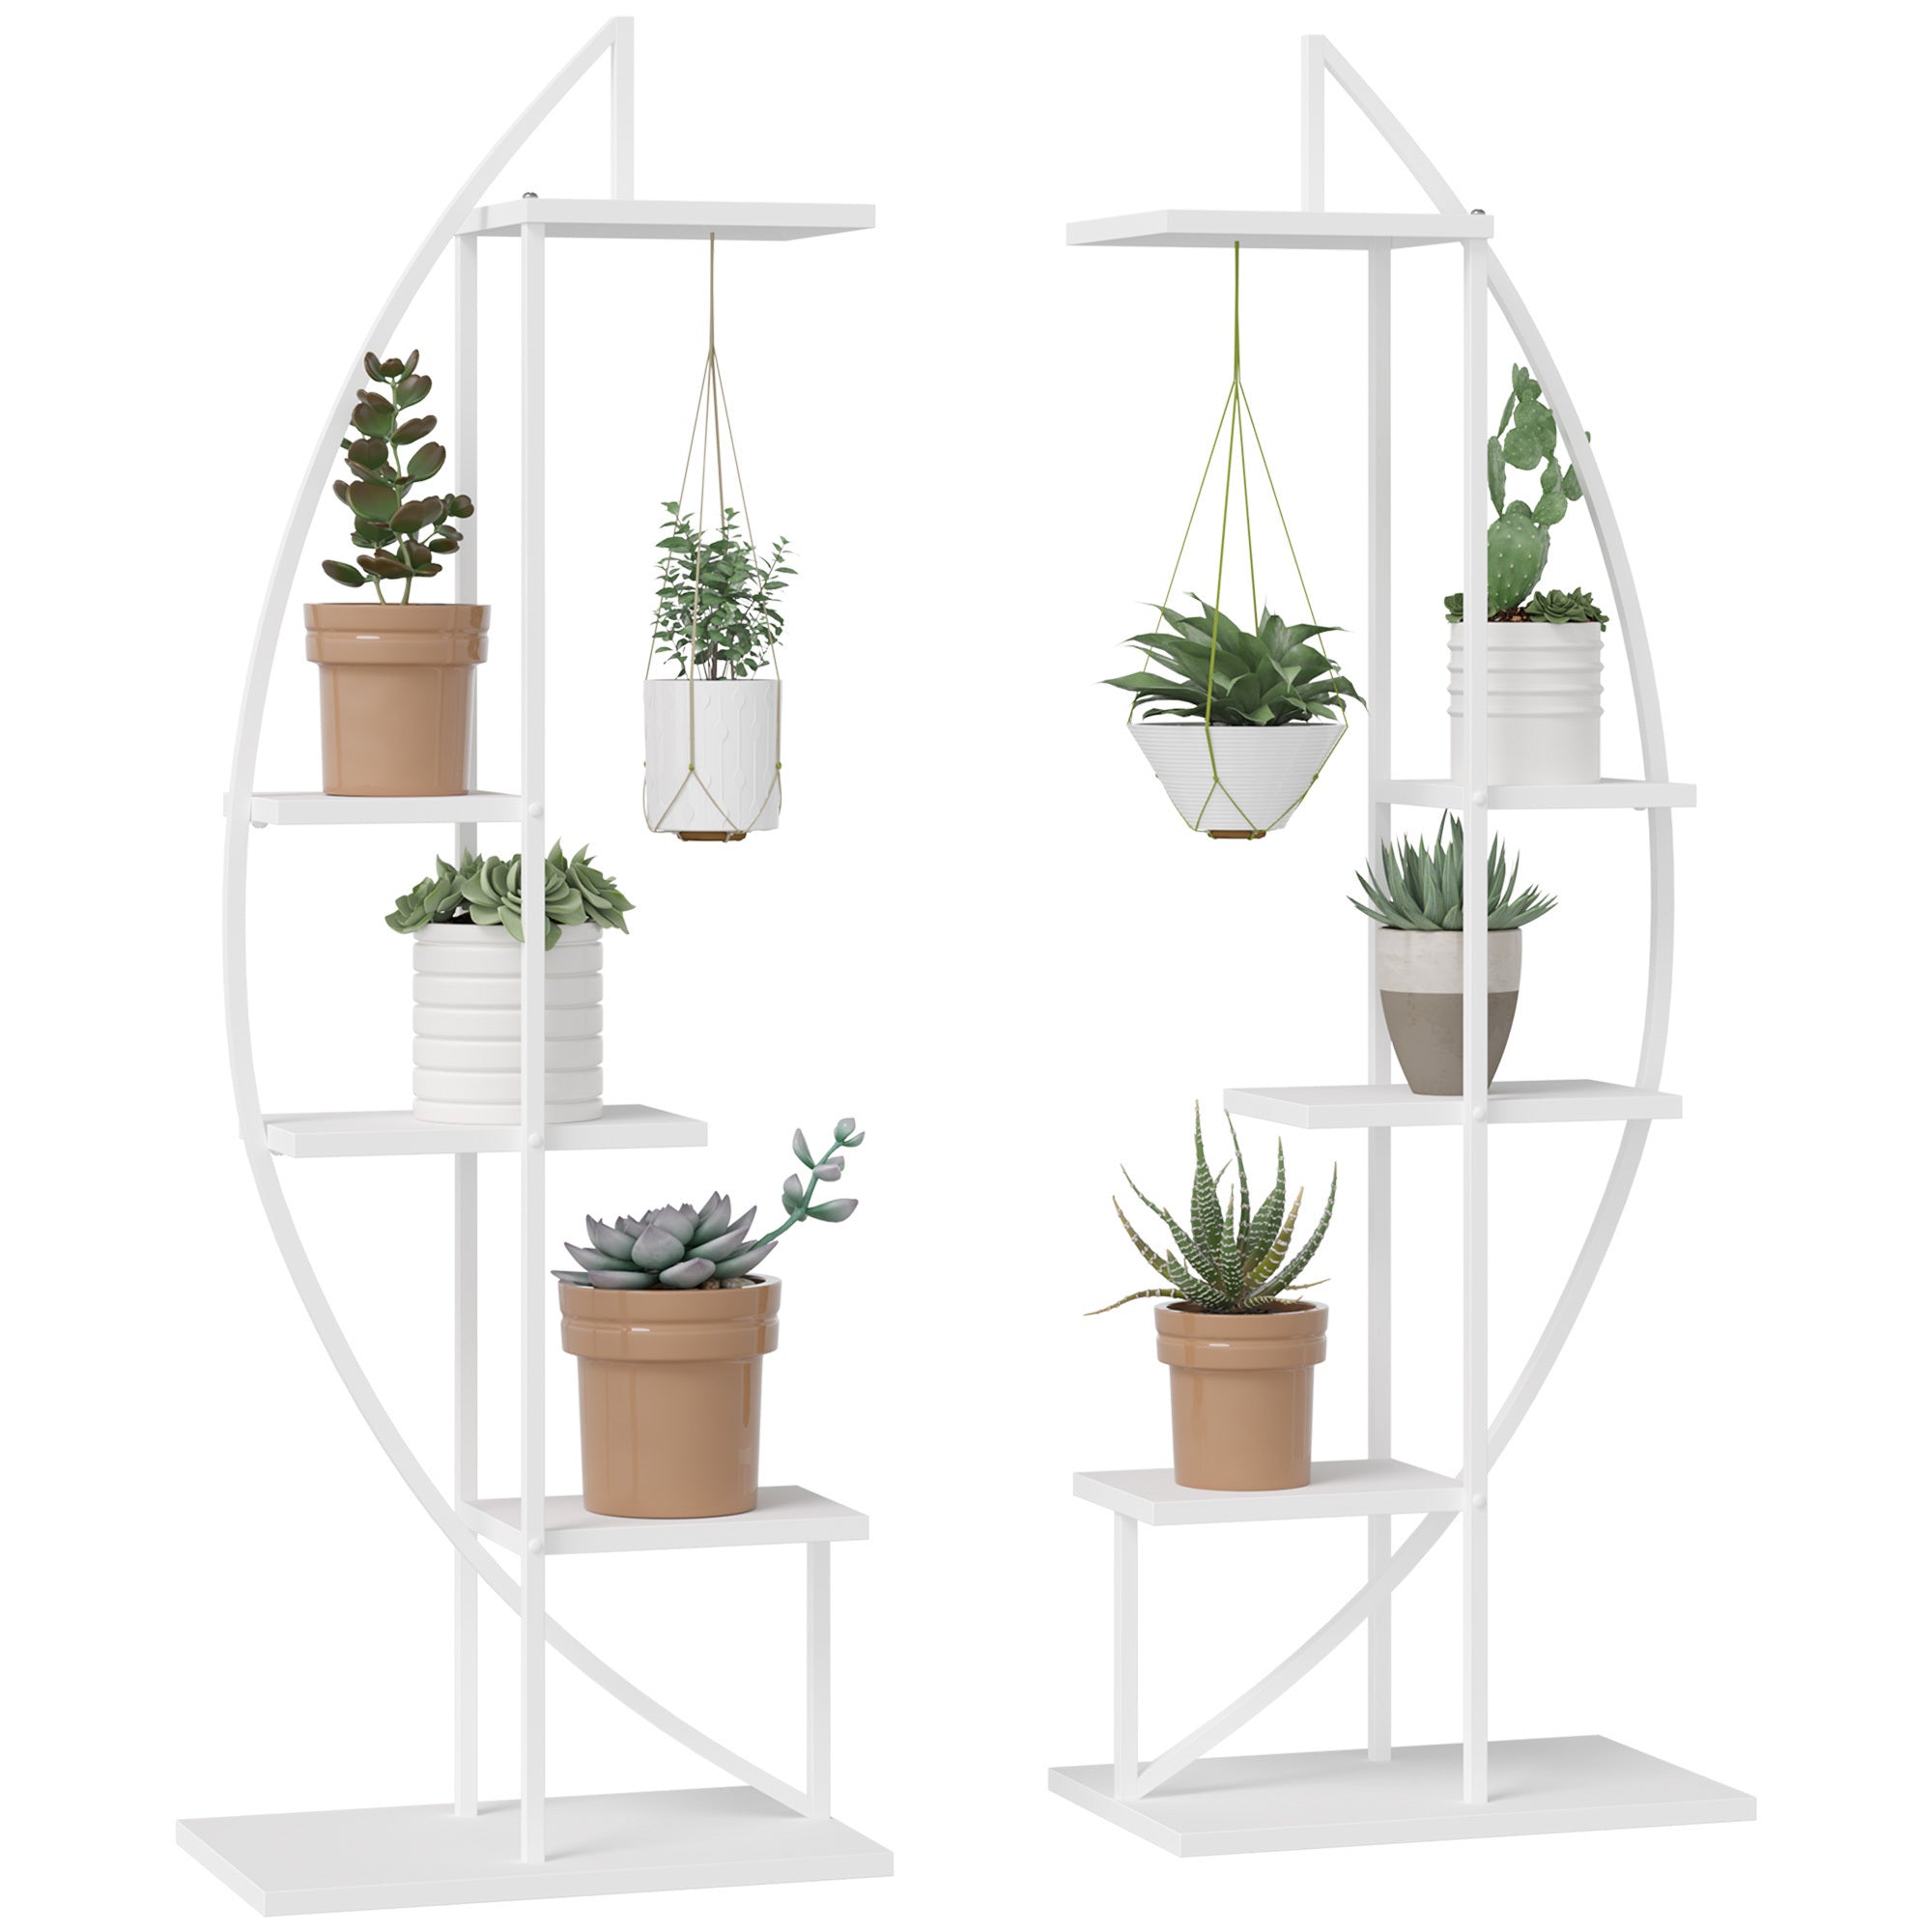 5-Tier-Metal-Plant-Stand-with-Hangers,-Half-Moon-Shape-Flower-Pot-Display-Shelf-for-Living-Room-Patio-Garden-Balcony-Decor,-White-Pots-&-Planters